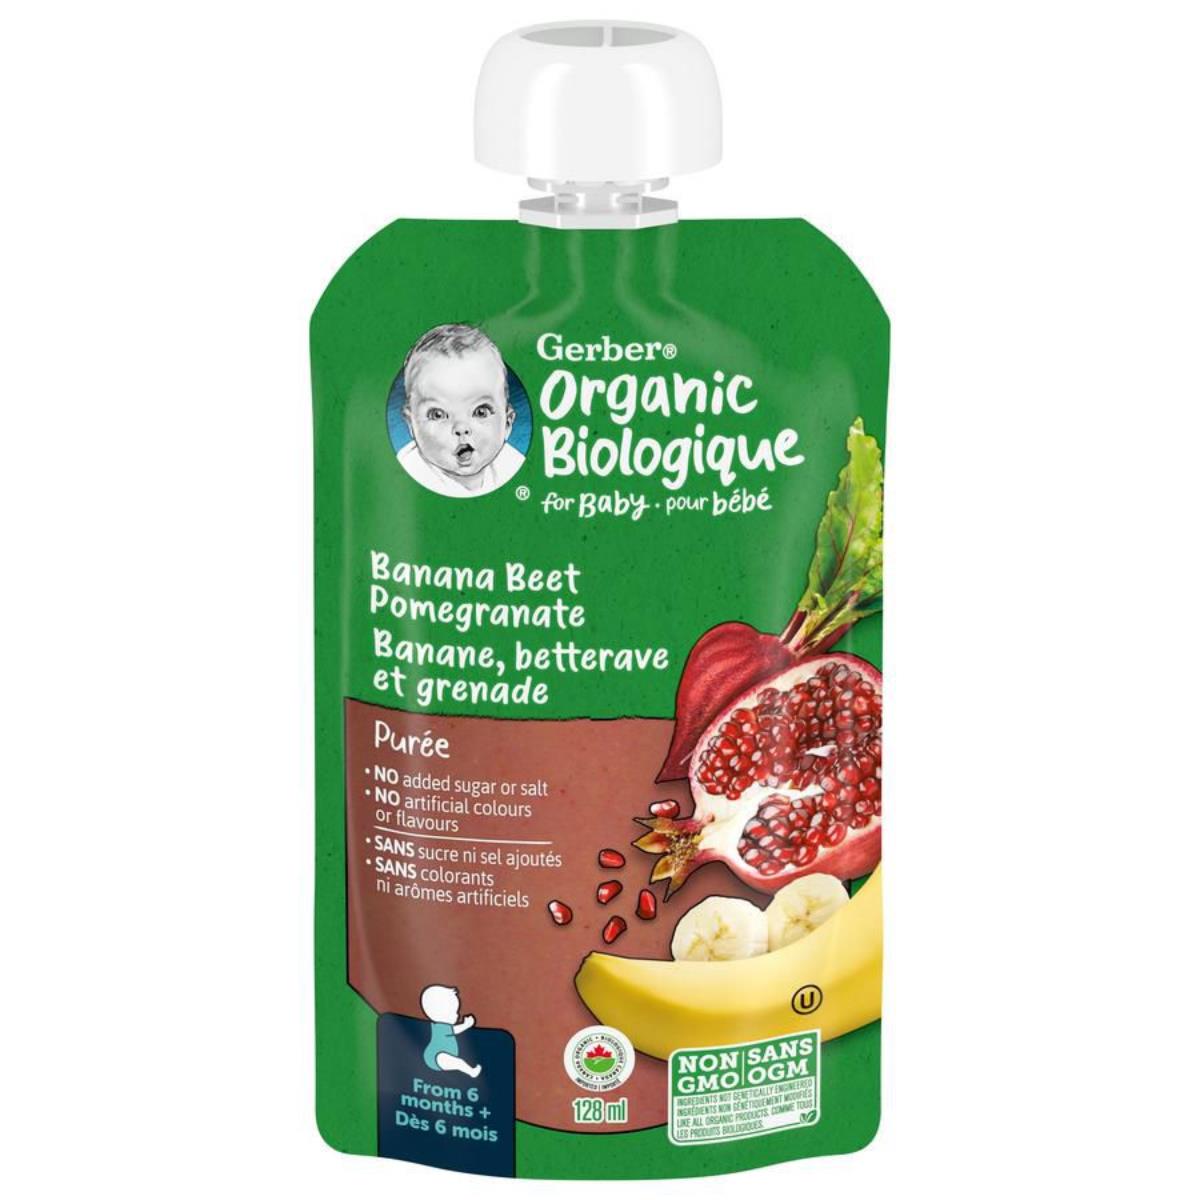 Gerber Organic Biologique for Baby, 2nd Foods for Sitter, Banana Beet Pomegranate, 99g